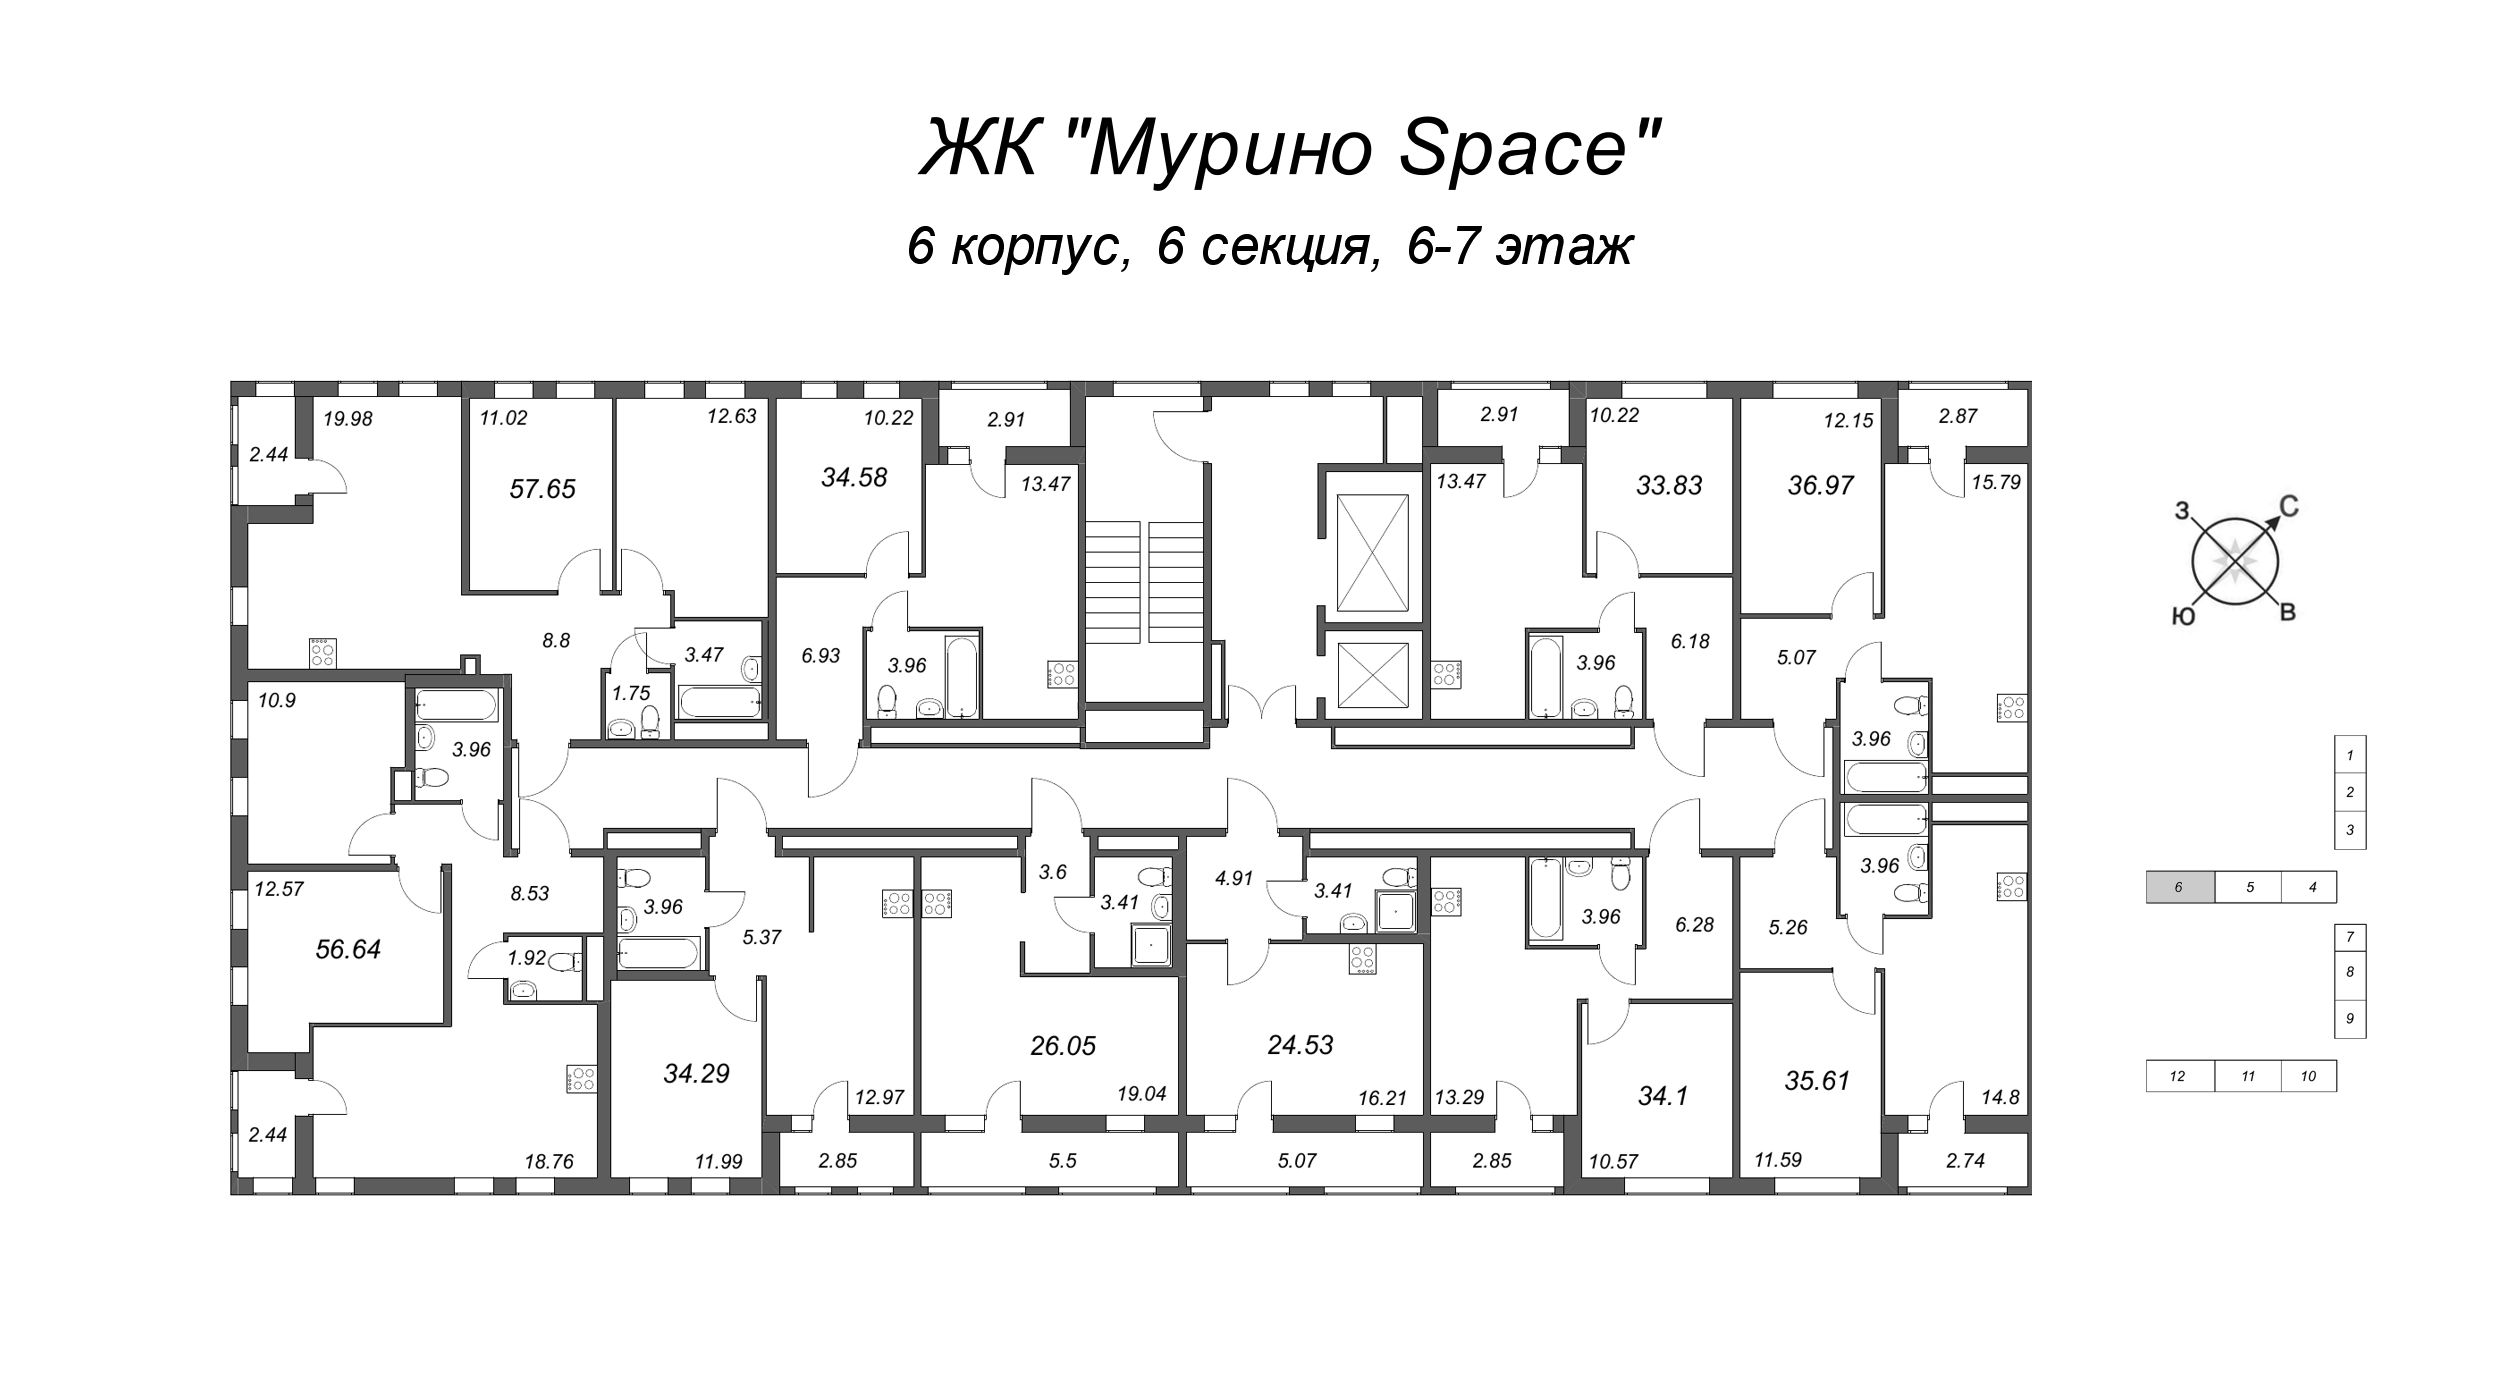 2-комнатная (Евро) квартира, 34.58 м² - планировка этажа